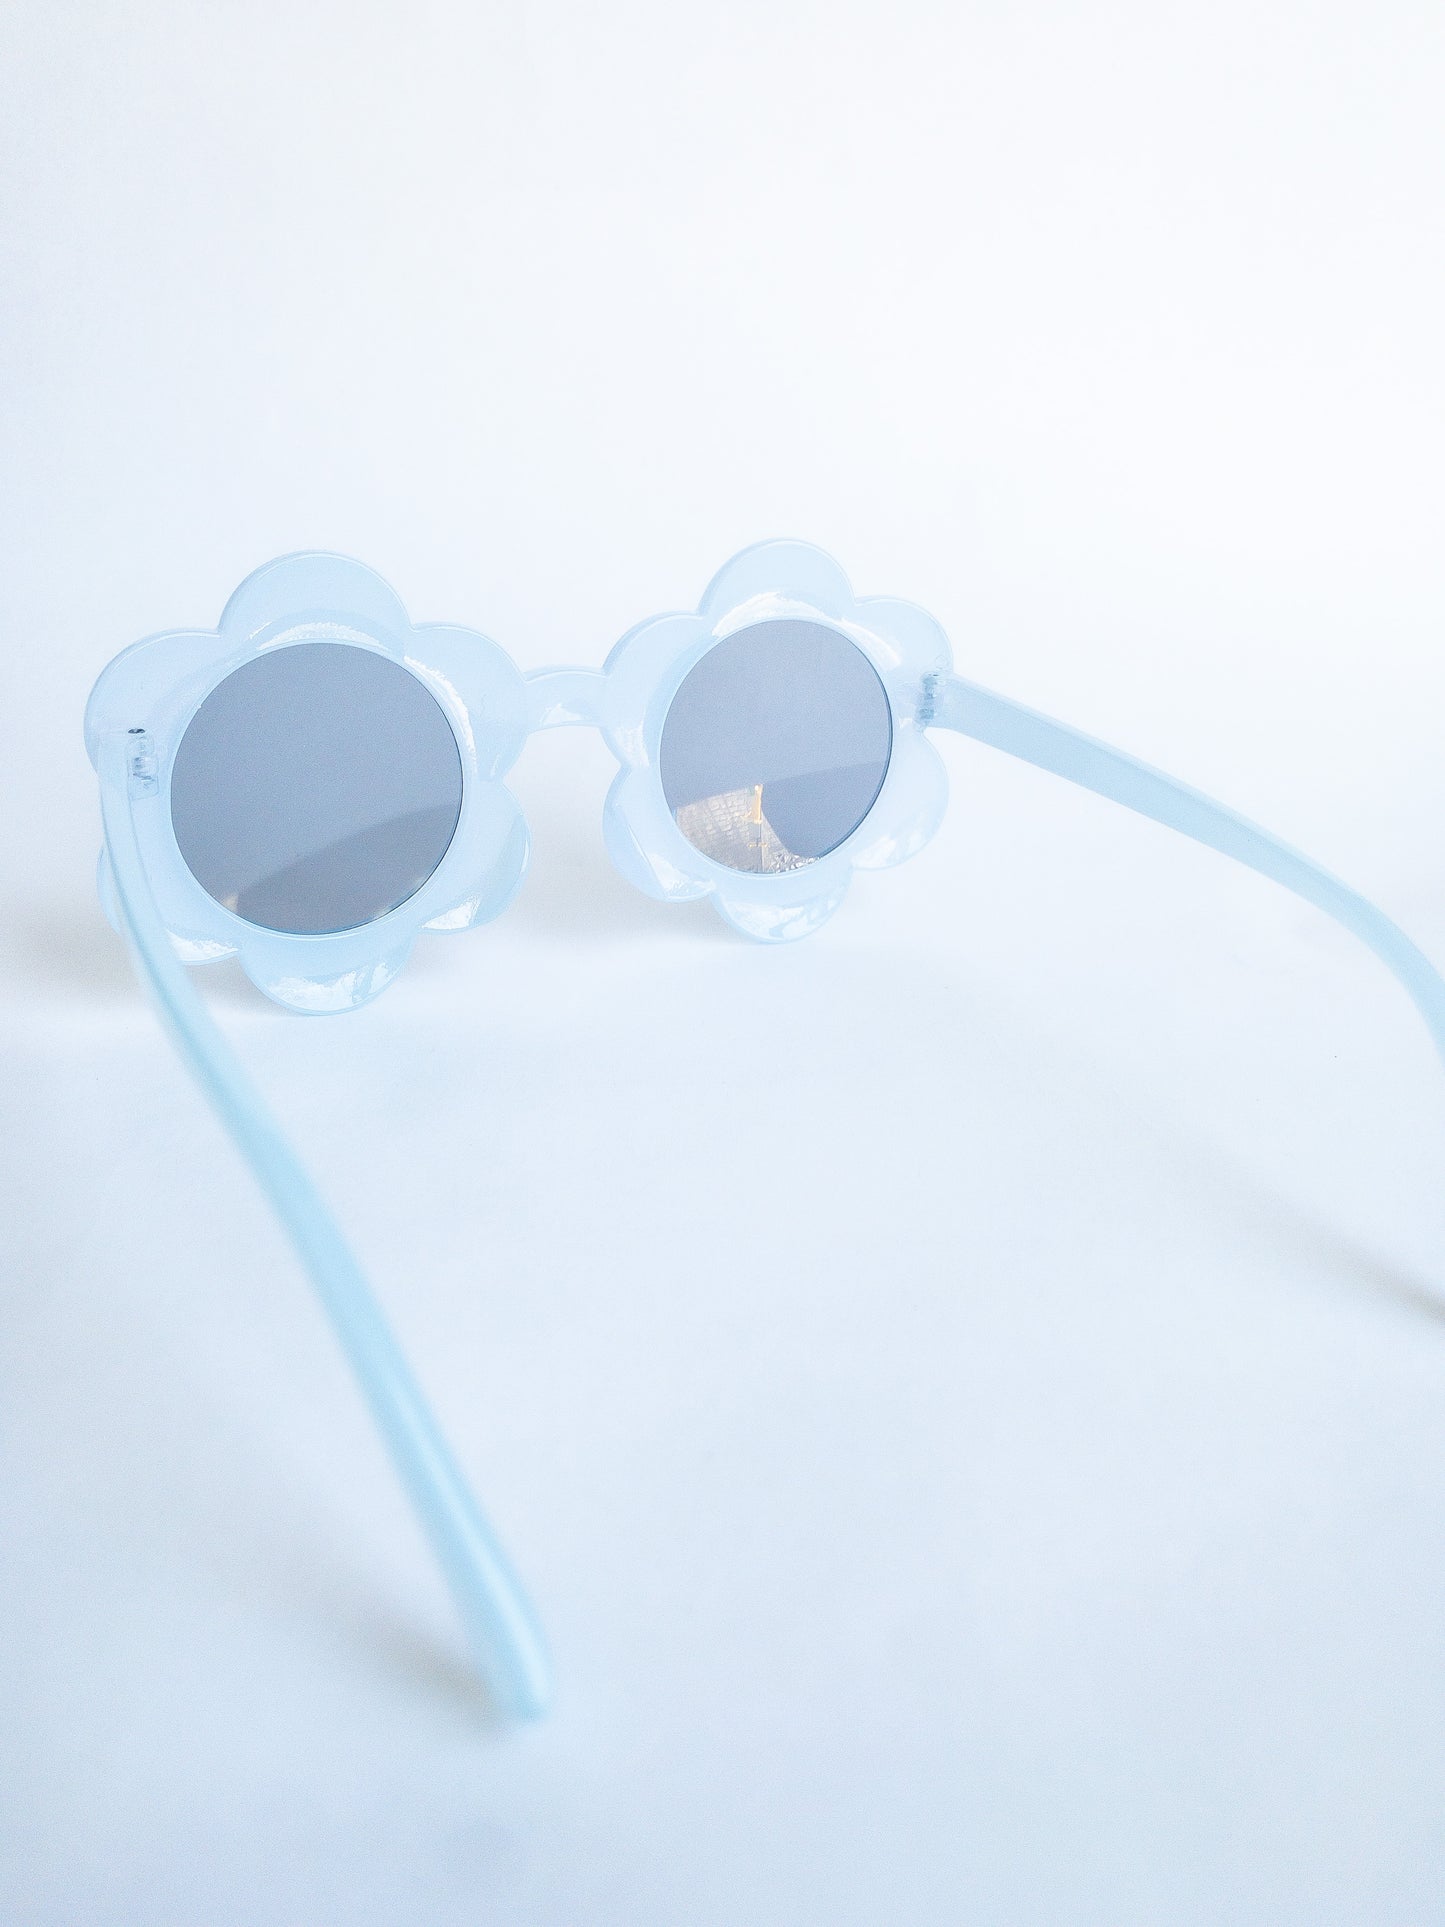 Flower Sunglasses for Kids in Jelly Blue